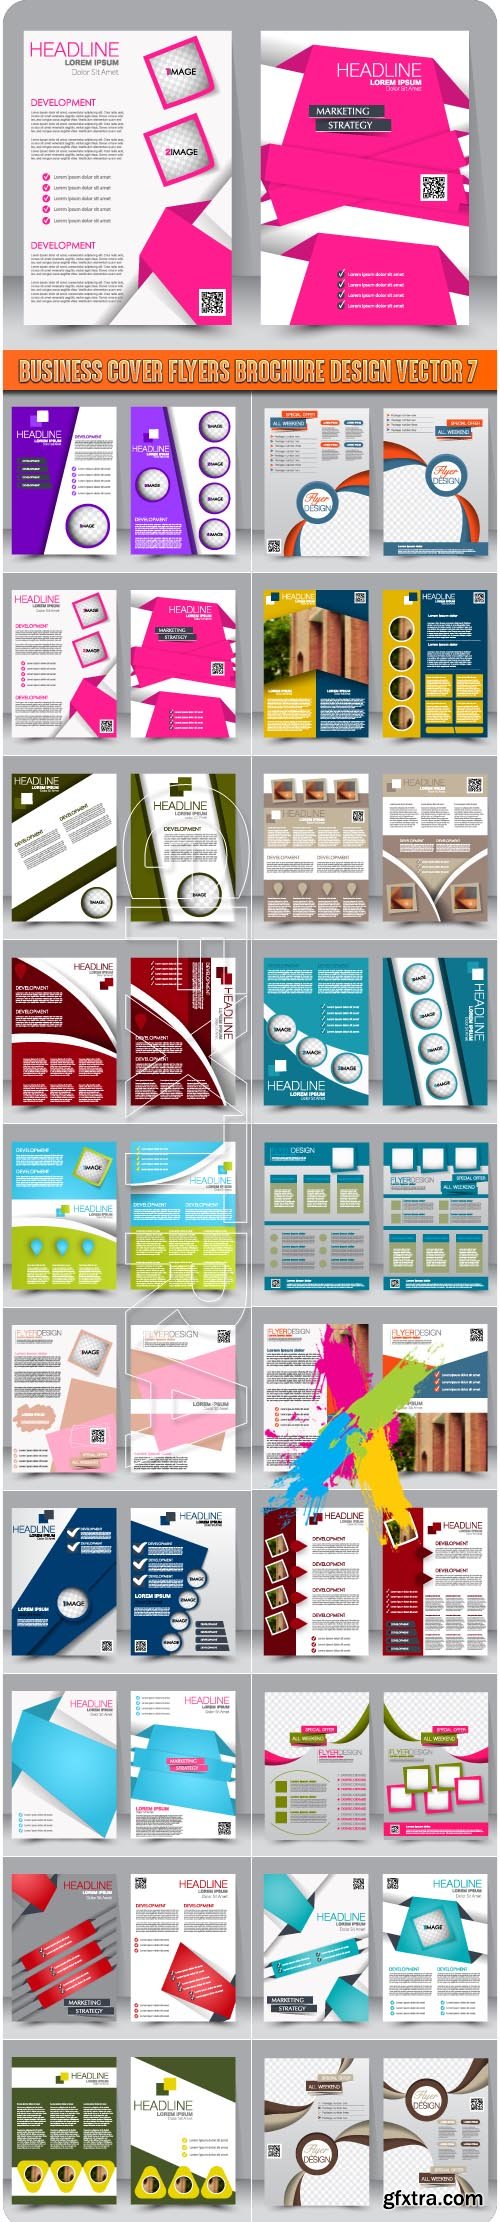 Business cover flyers brochure design vector 7